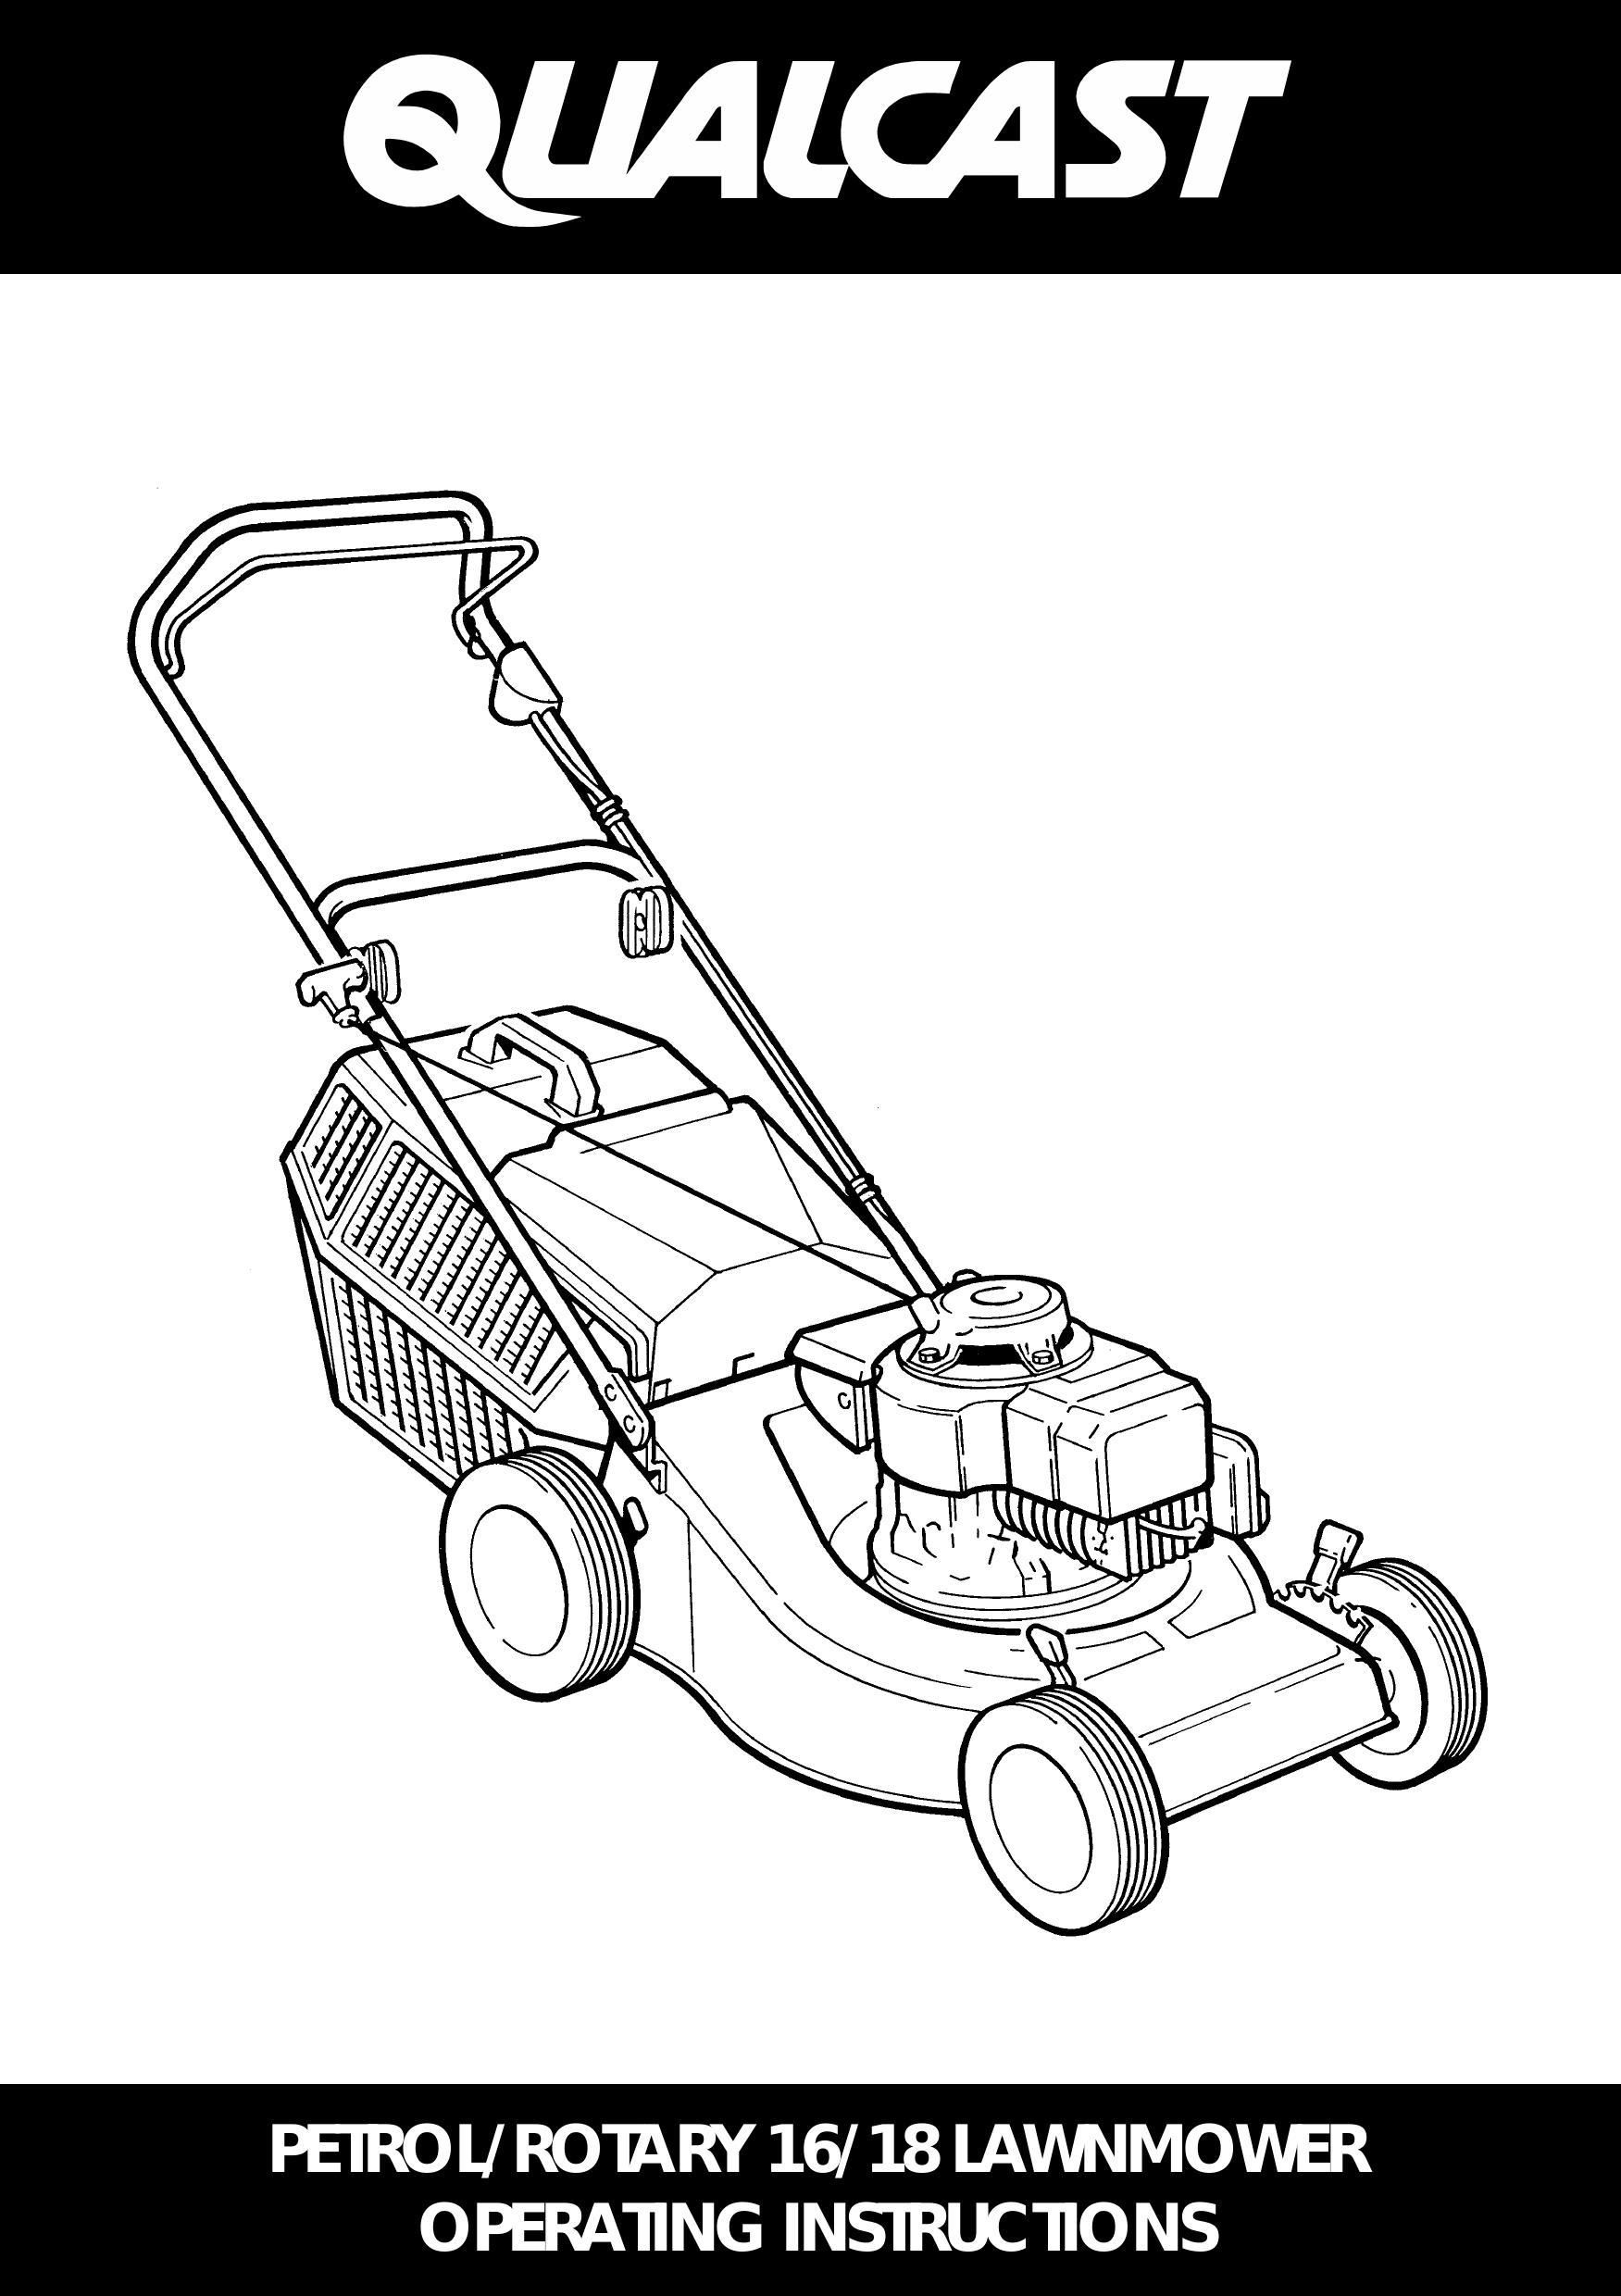 Qualcast 16/18 Lawn Mower User Manual